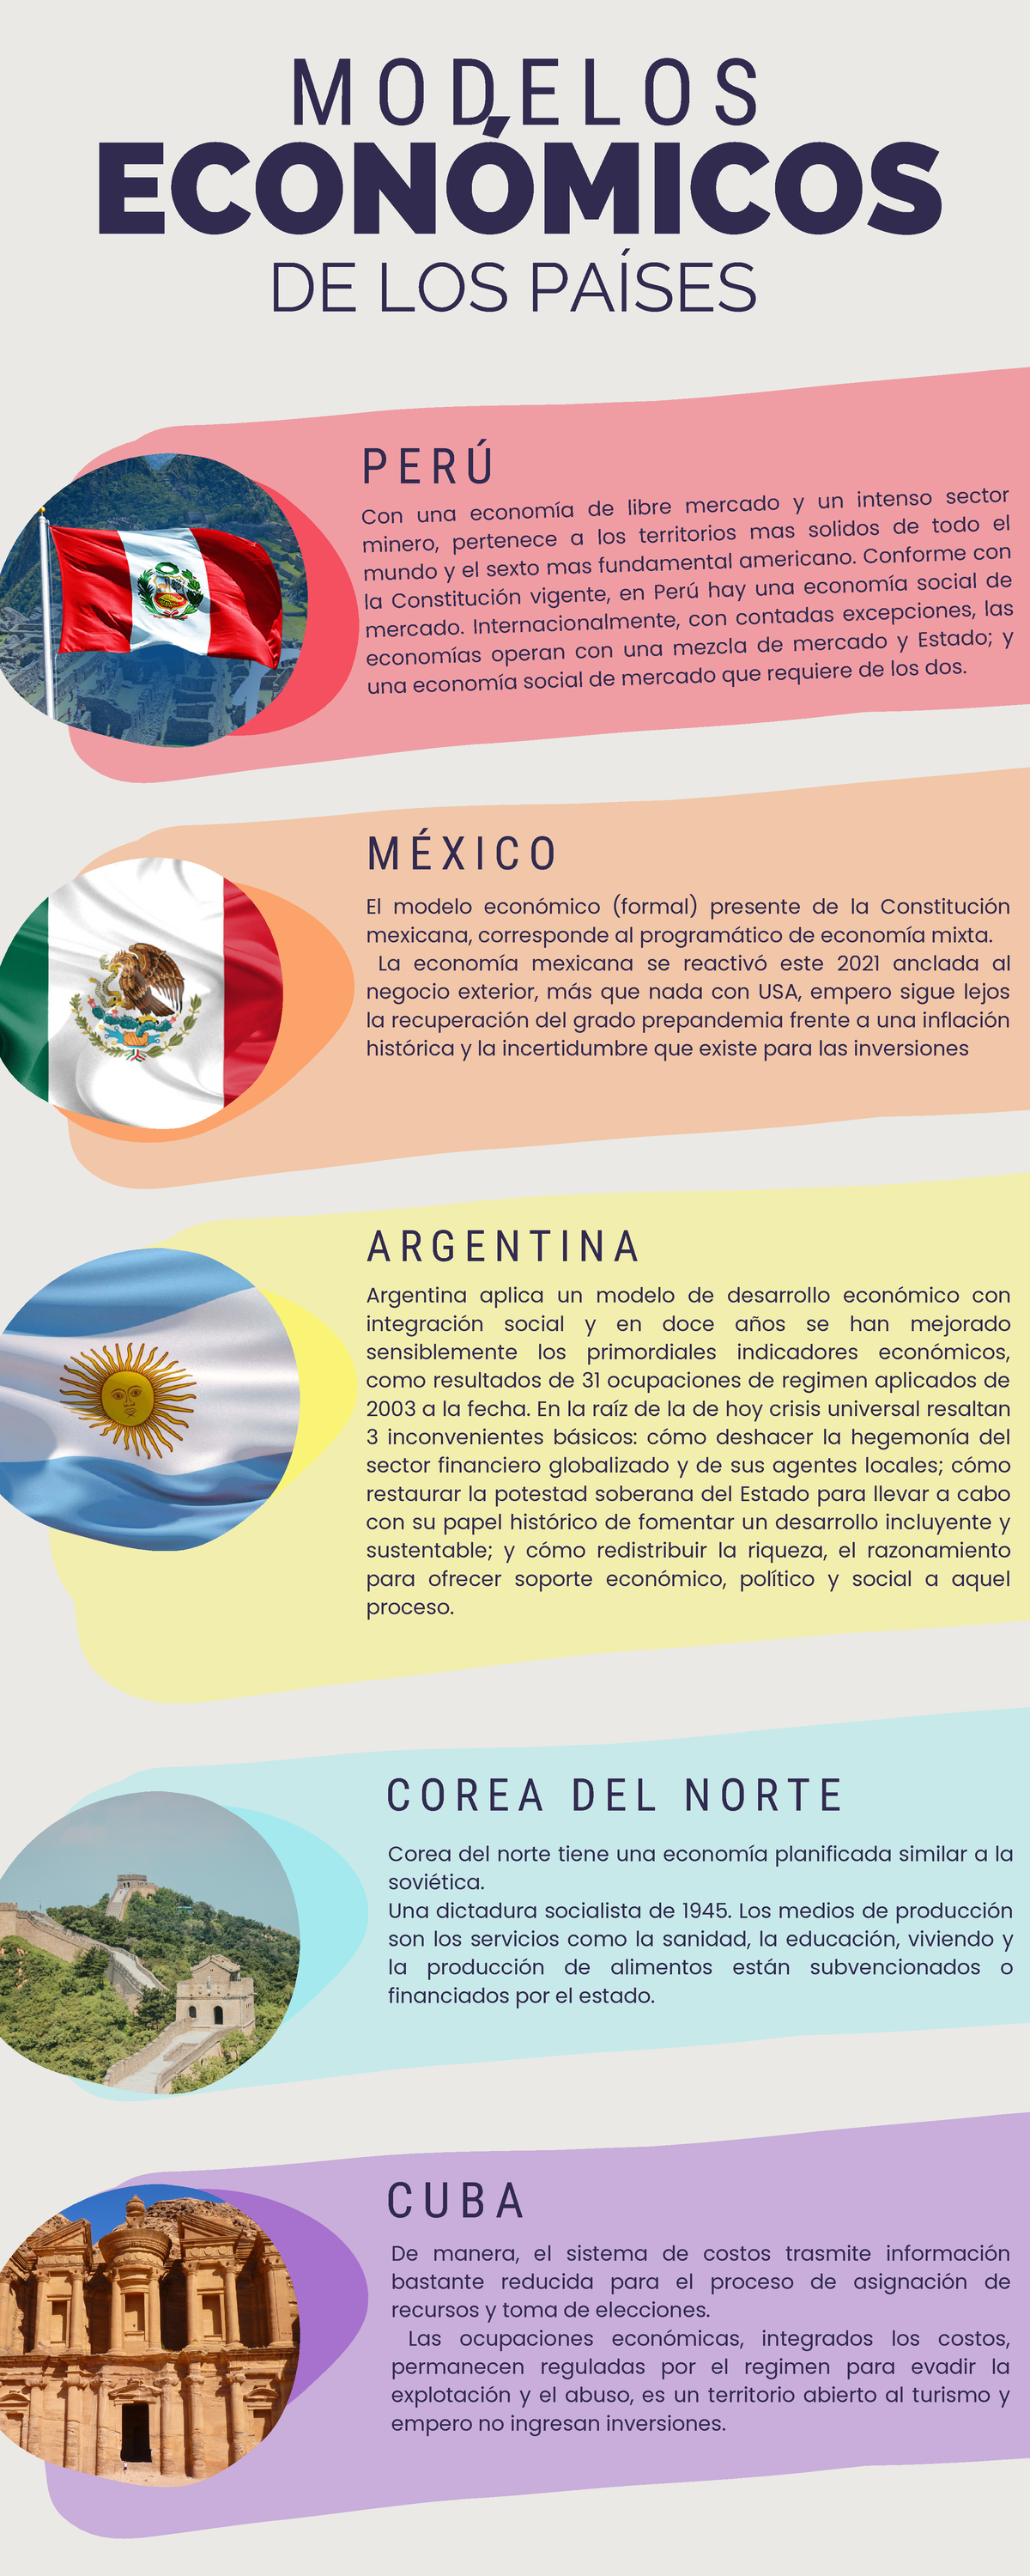 Infografia - Modelo economico de paises - DE LOS PAÍSES ECONÓMICOS PERÚ  MODELOS MÉXICO ARGENTINA - Studocu